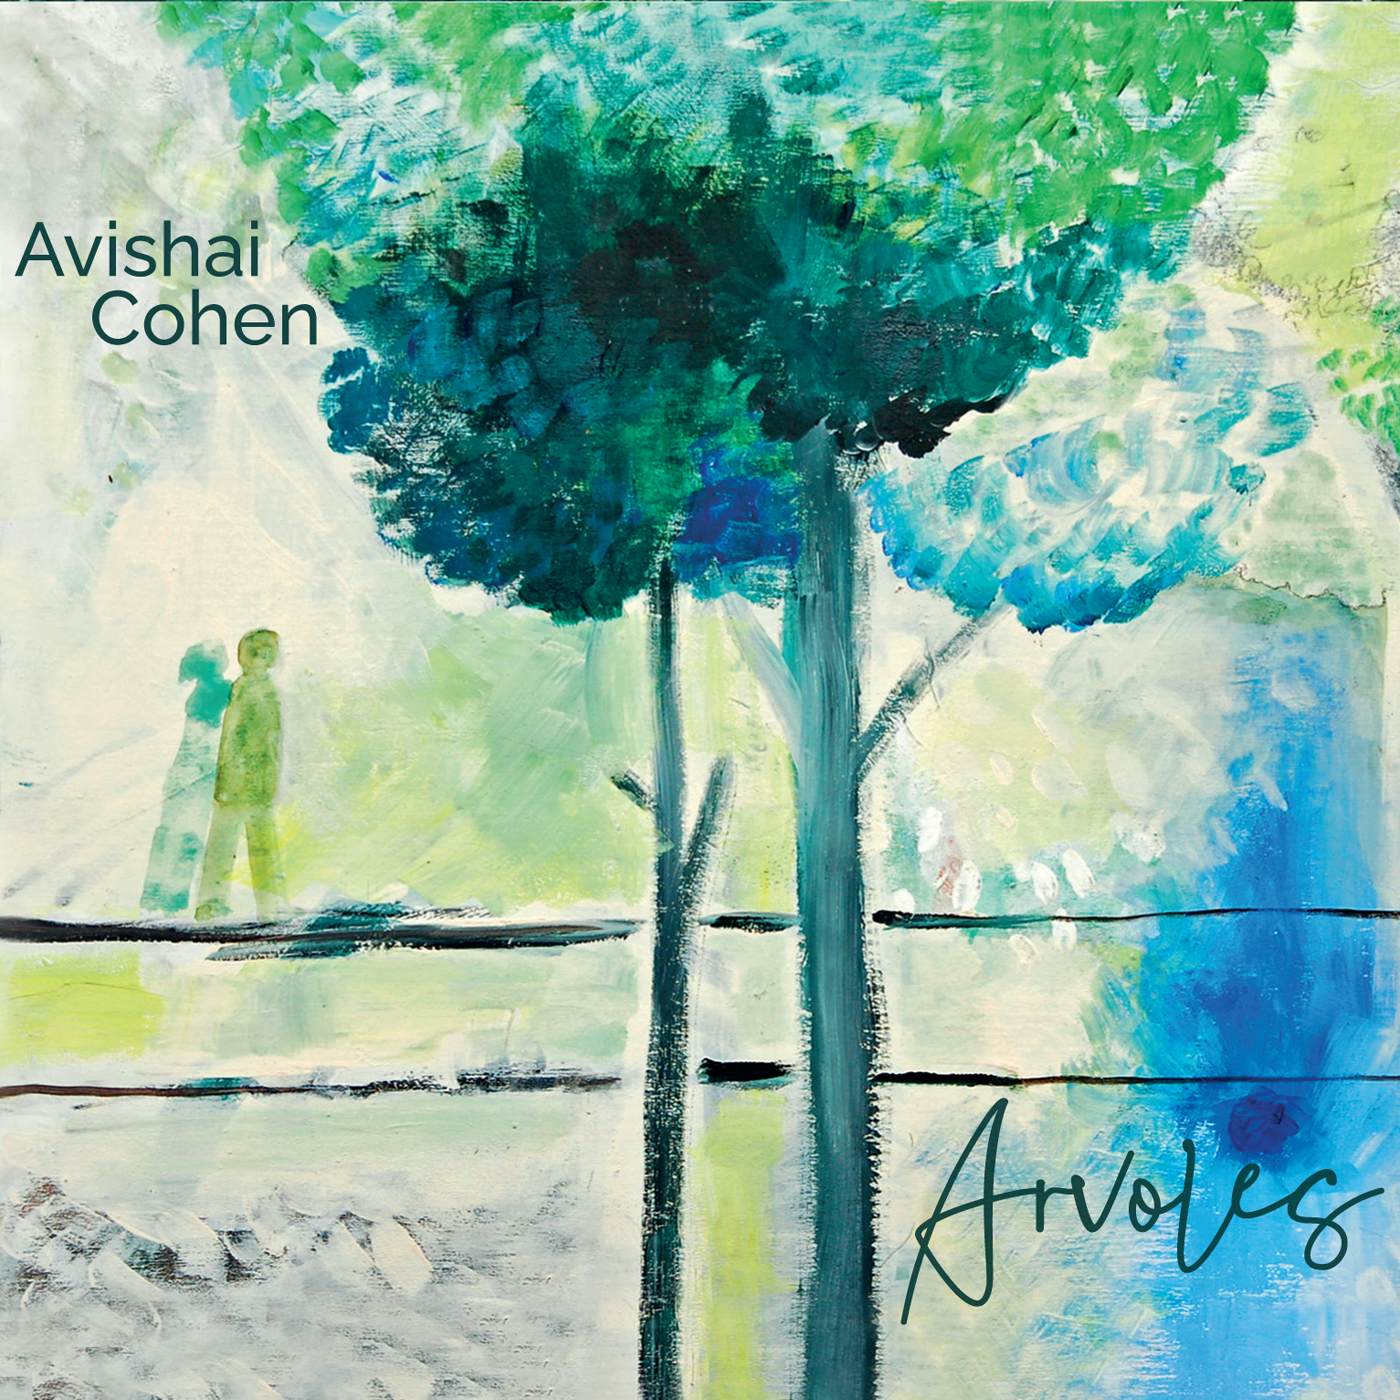 Avishai Cohen ARVOLES CD